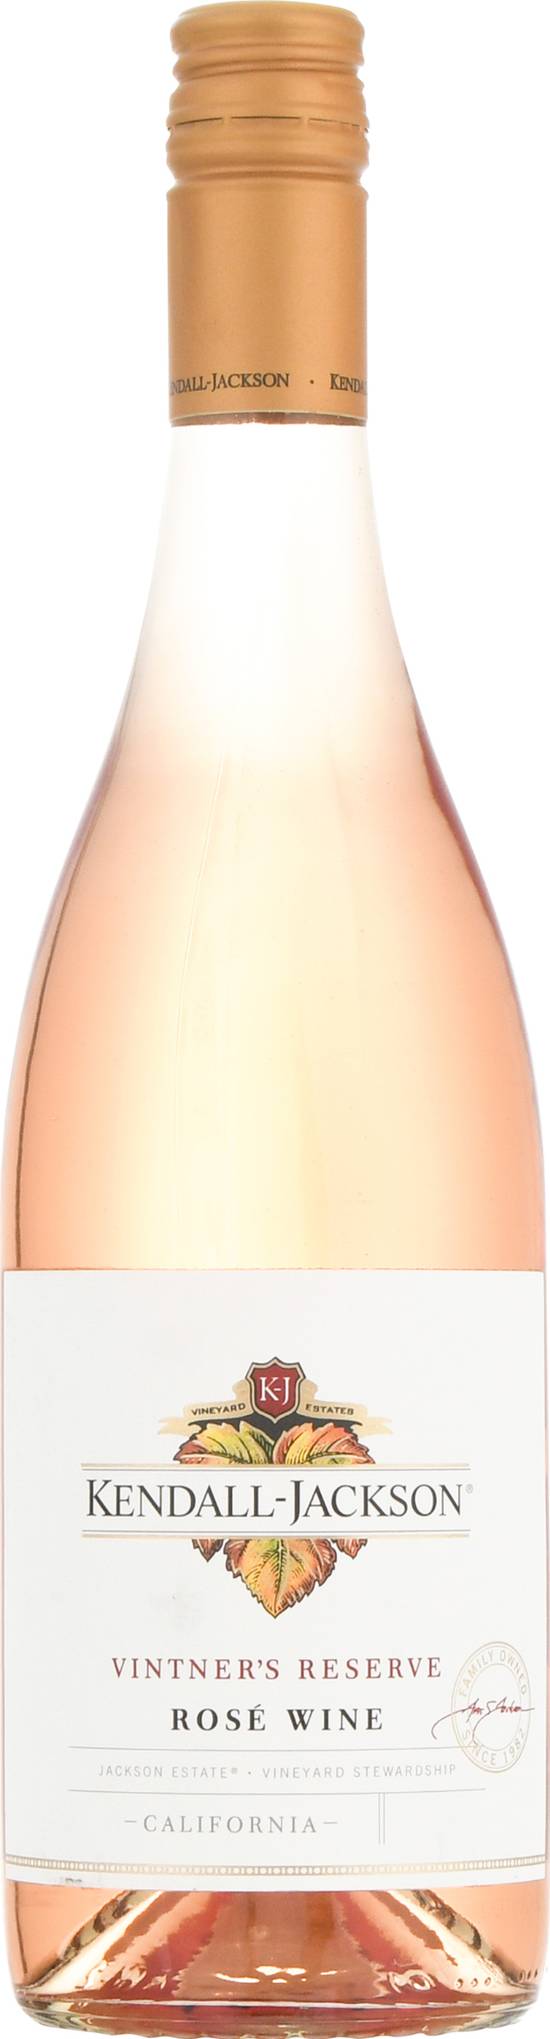 Kendall-Jackson Vintner’s Reserve Rose Wine (750 ml)